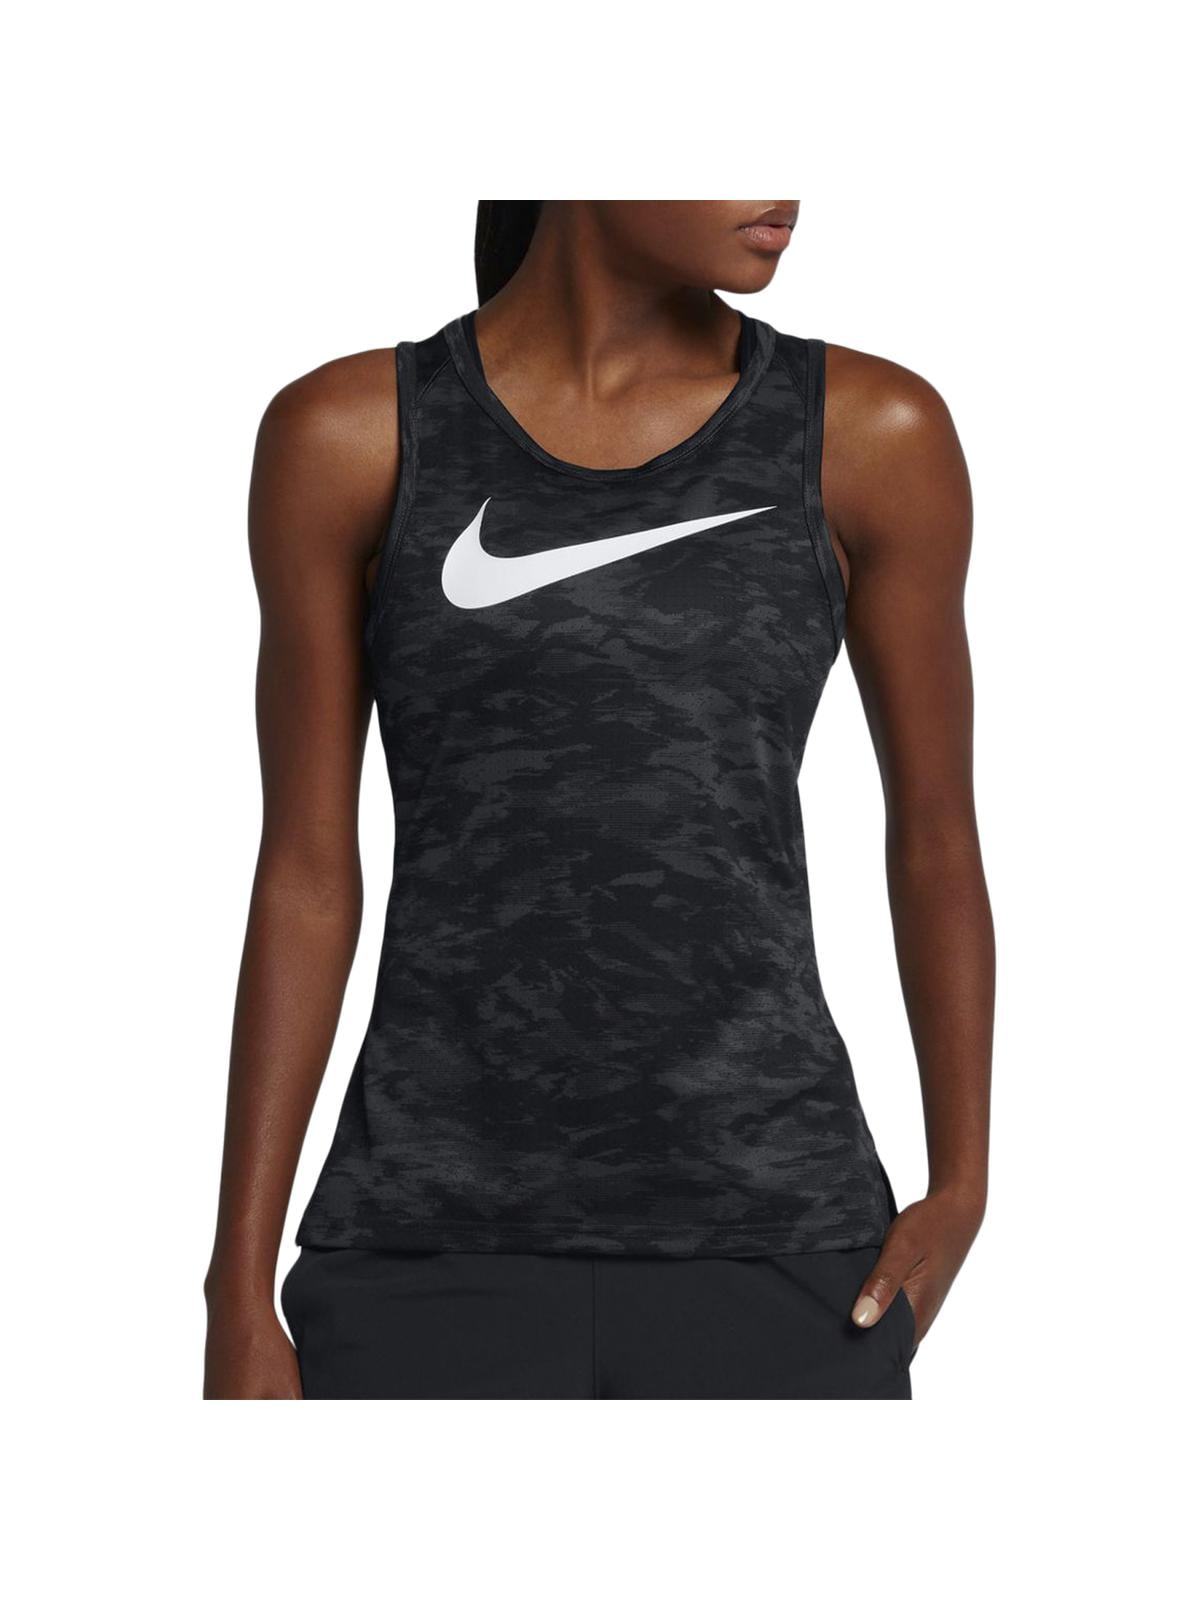 Nike Womens Dry Elite Printed Basketball Tank Top - Walmart.com